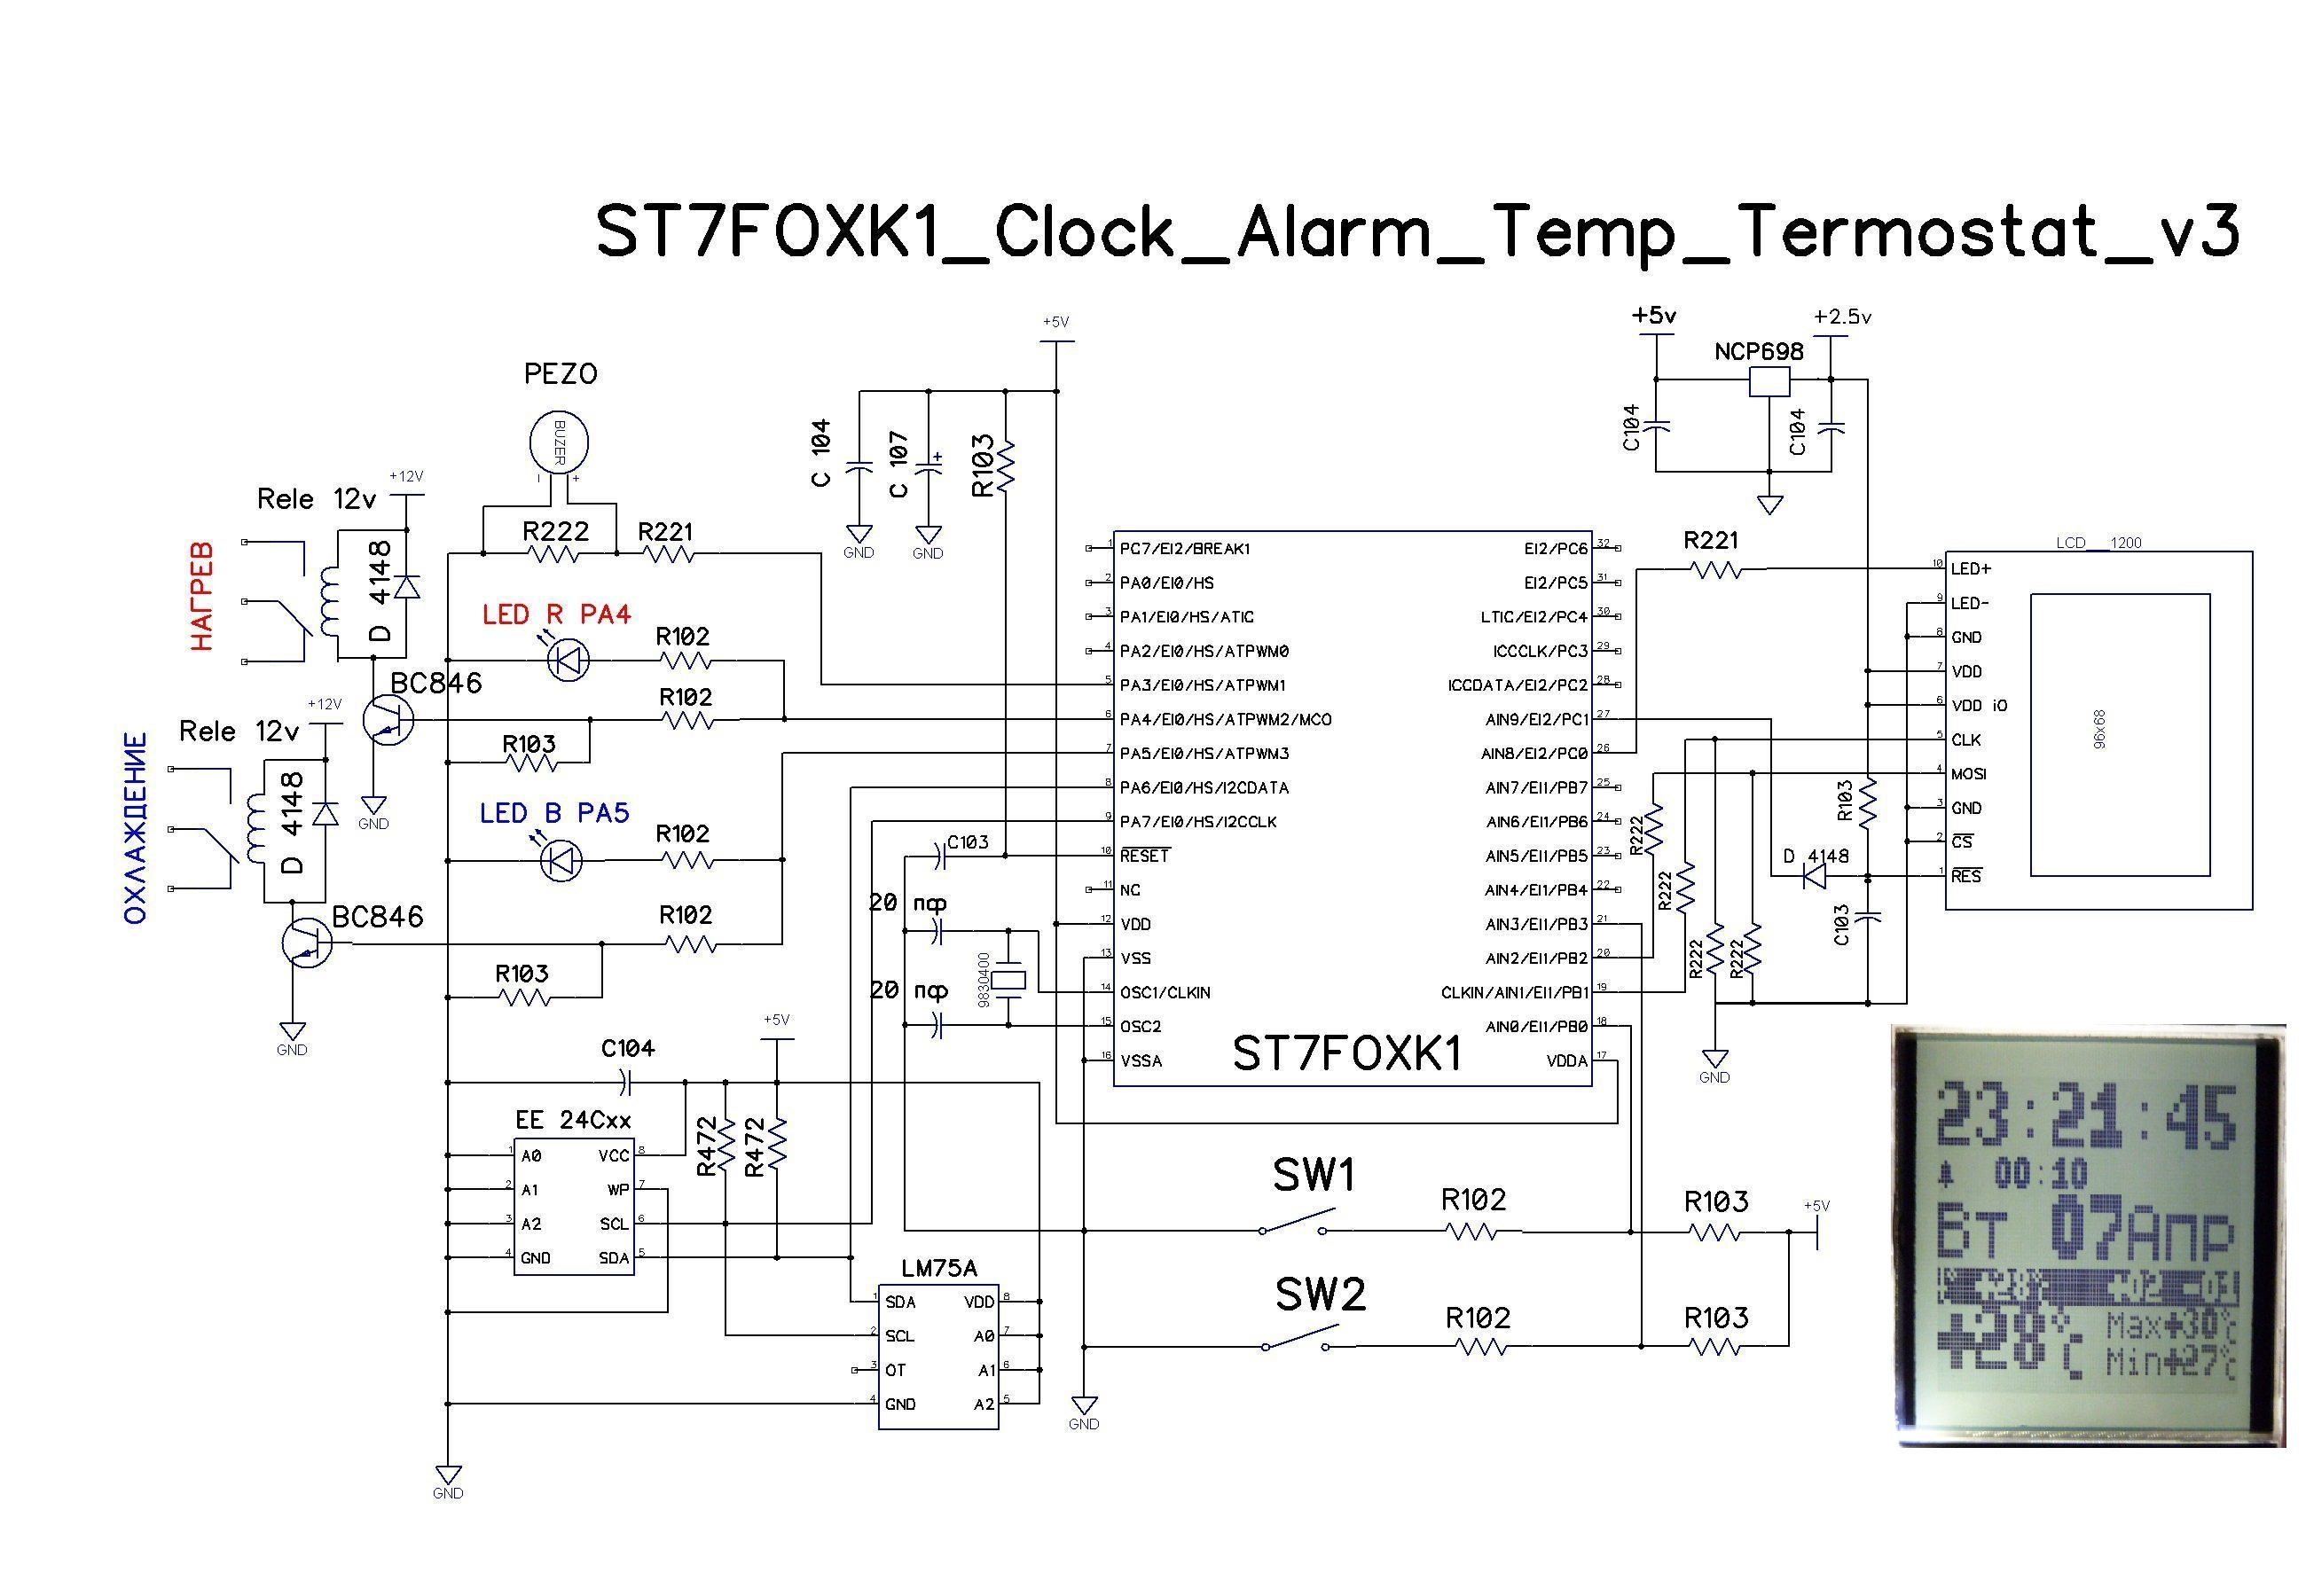 ST7FOXK1_Clock_Alarm_Temp_Termostat_cxem.JPG